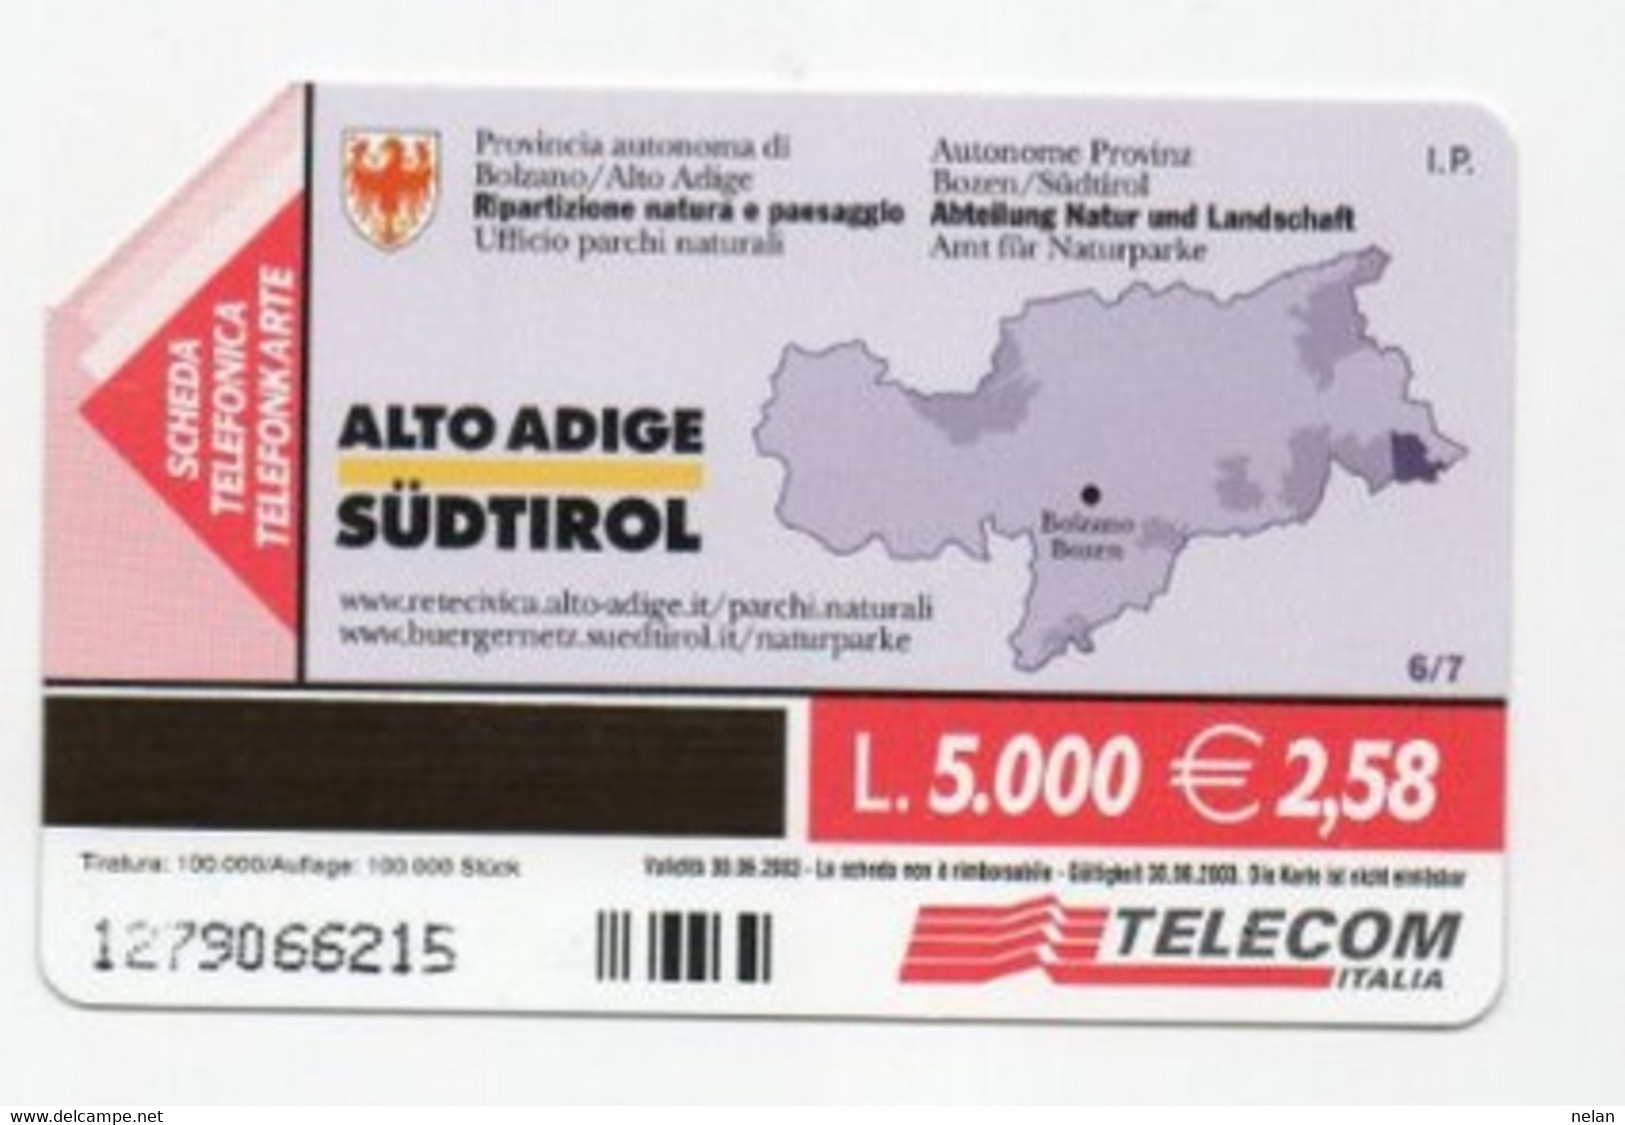 SCHEDA TELEFONICA - PHONE CARD - ITALIA - TELECOM - ALTO ADIGE - Montagnes